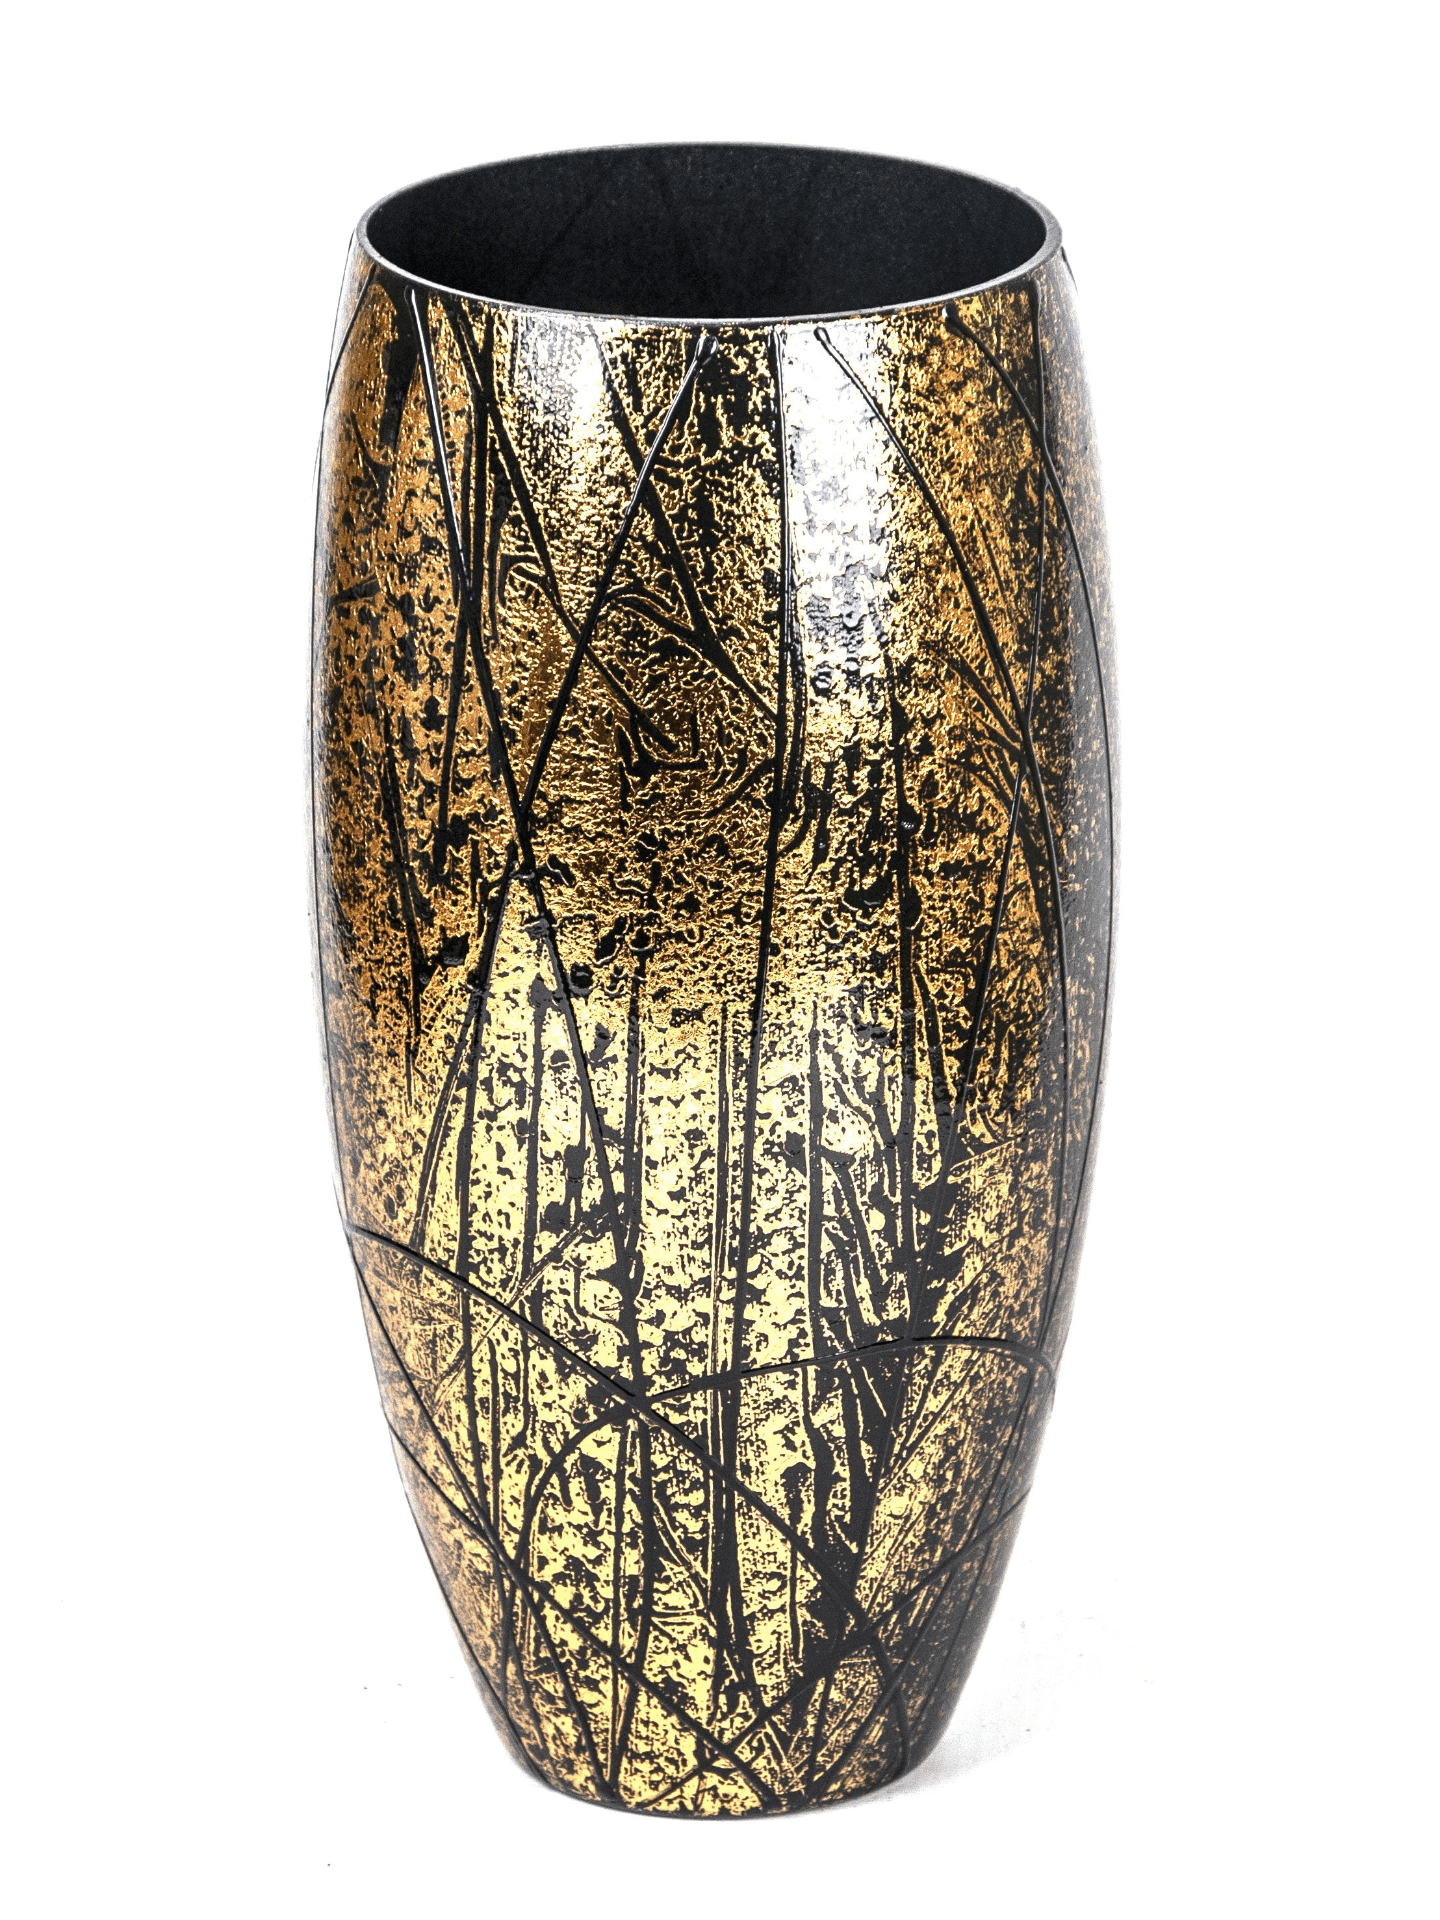 Handpainted Glass Vase for Flowers | Painted Art Glossy Oval Table Vase | 7518/300/lk286  